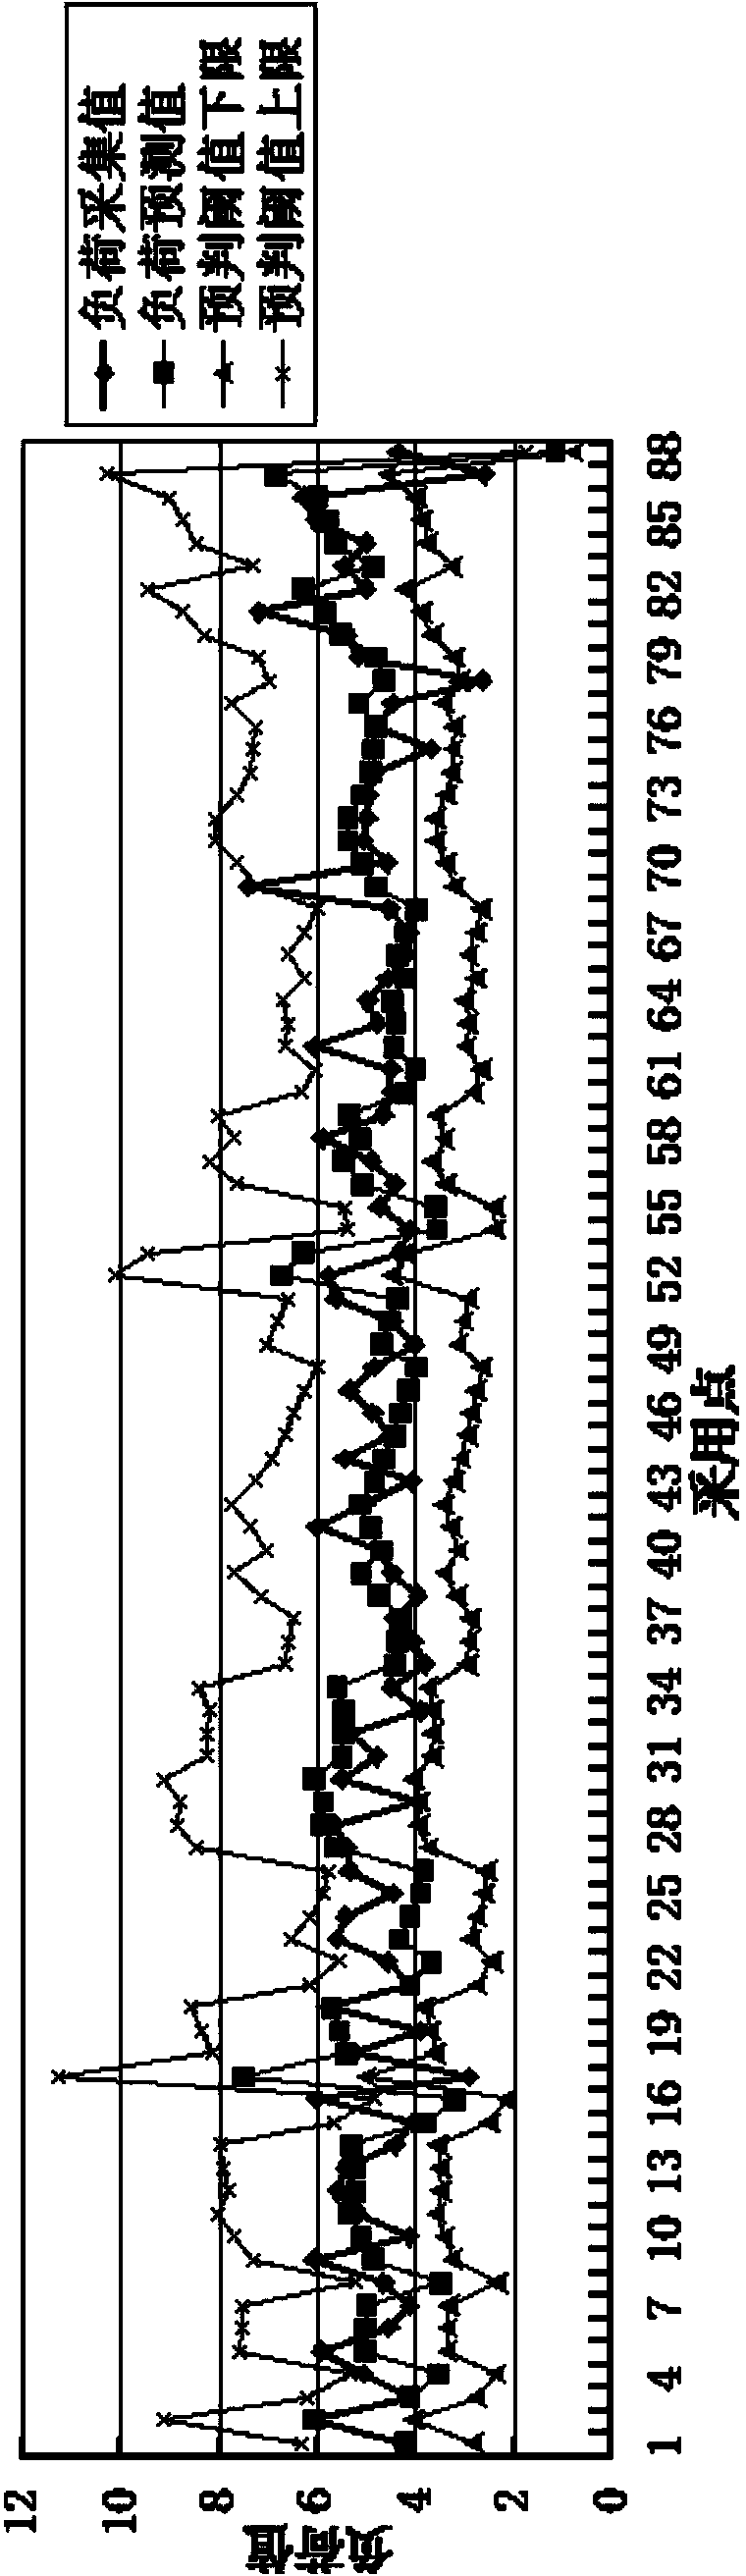 Method for finding abnormal electric energy meter based on gray GM (1, 1) model